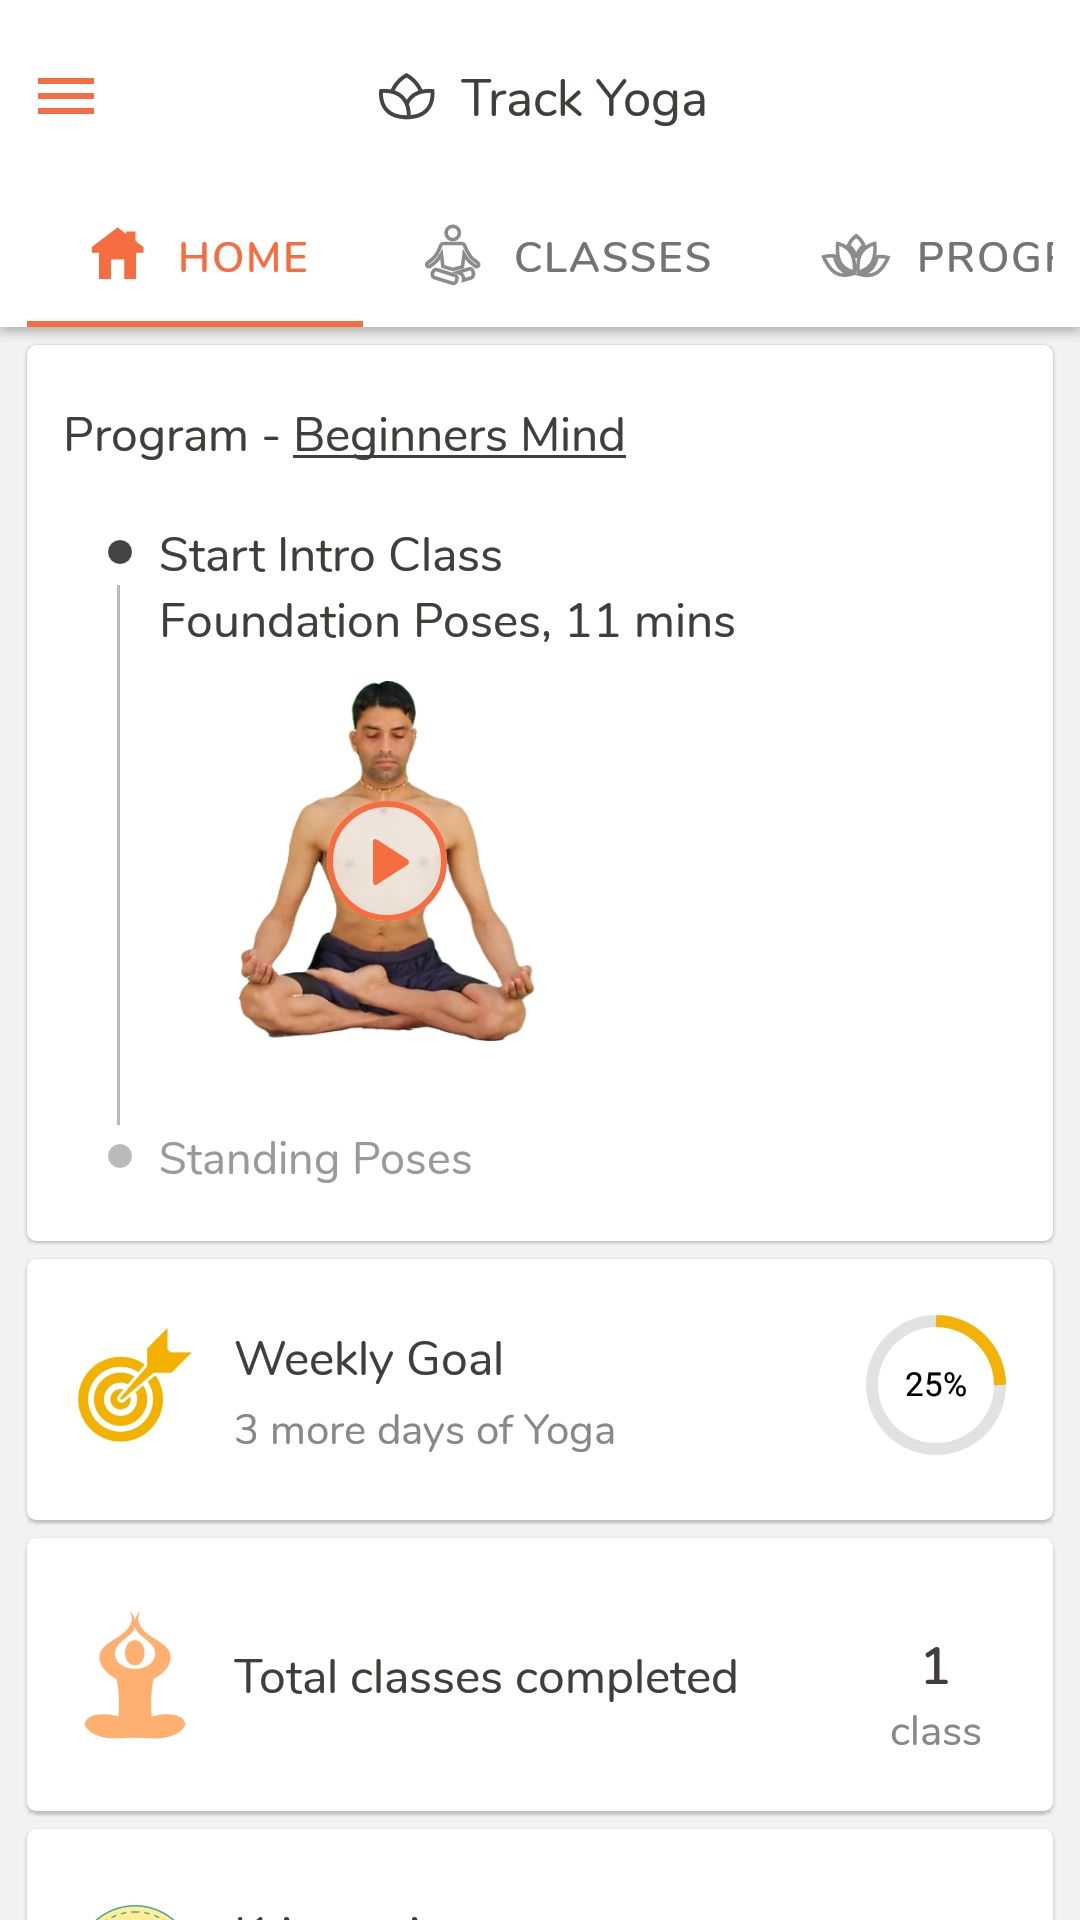 Track Yoga mobile yoga fitness app